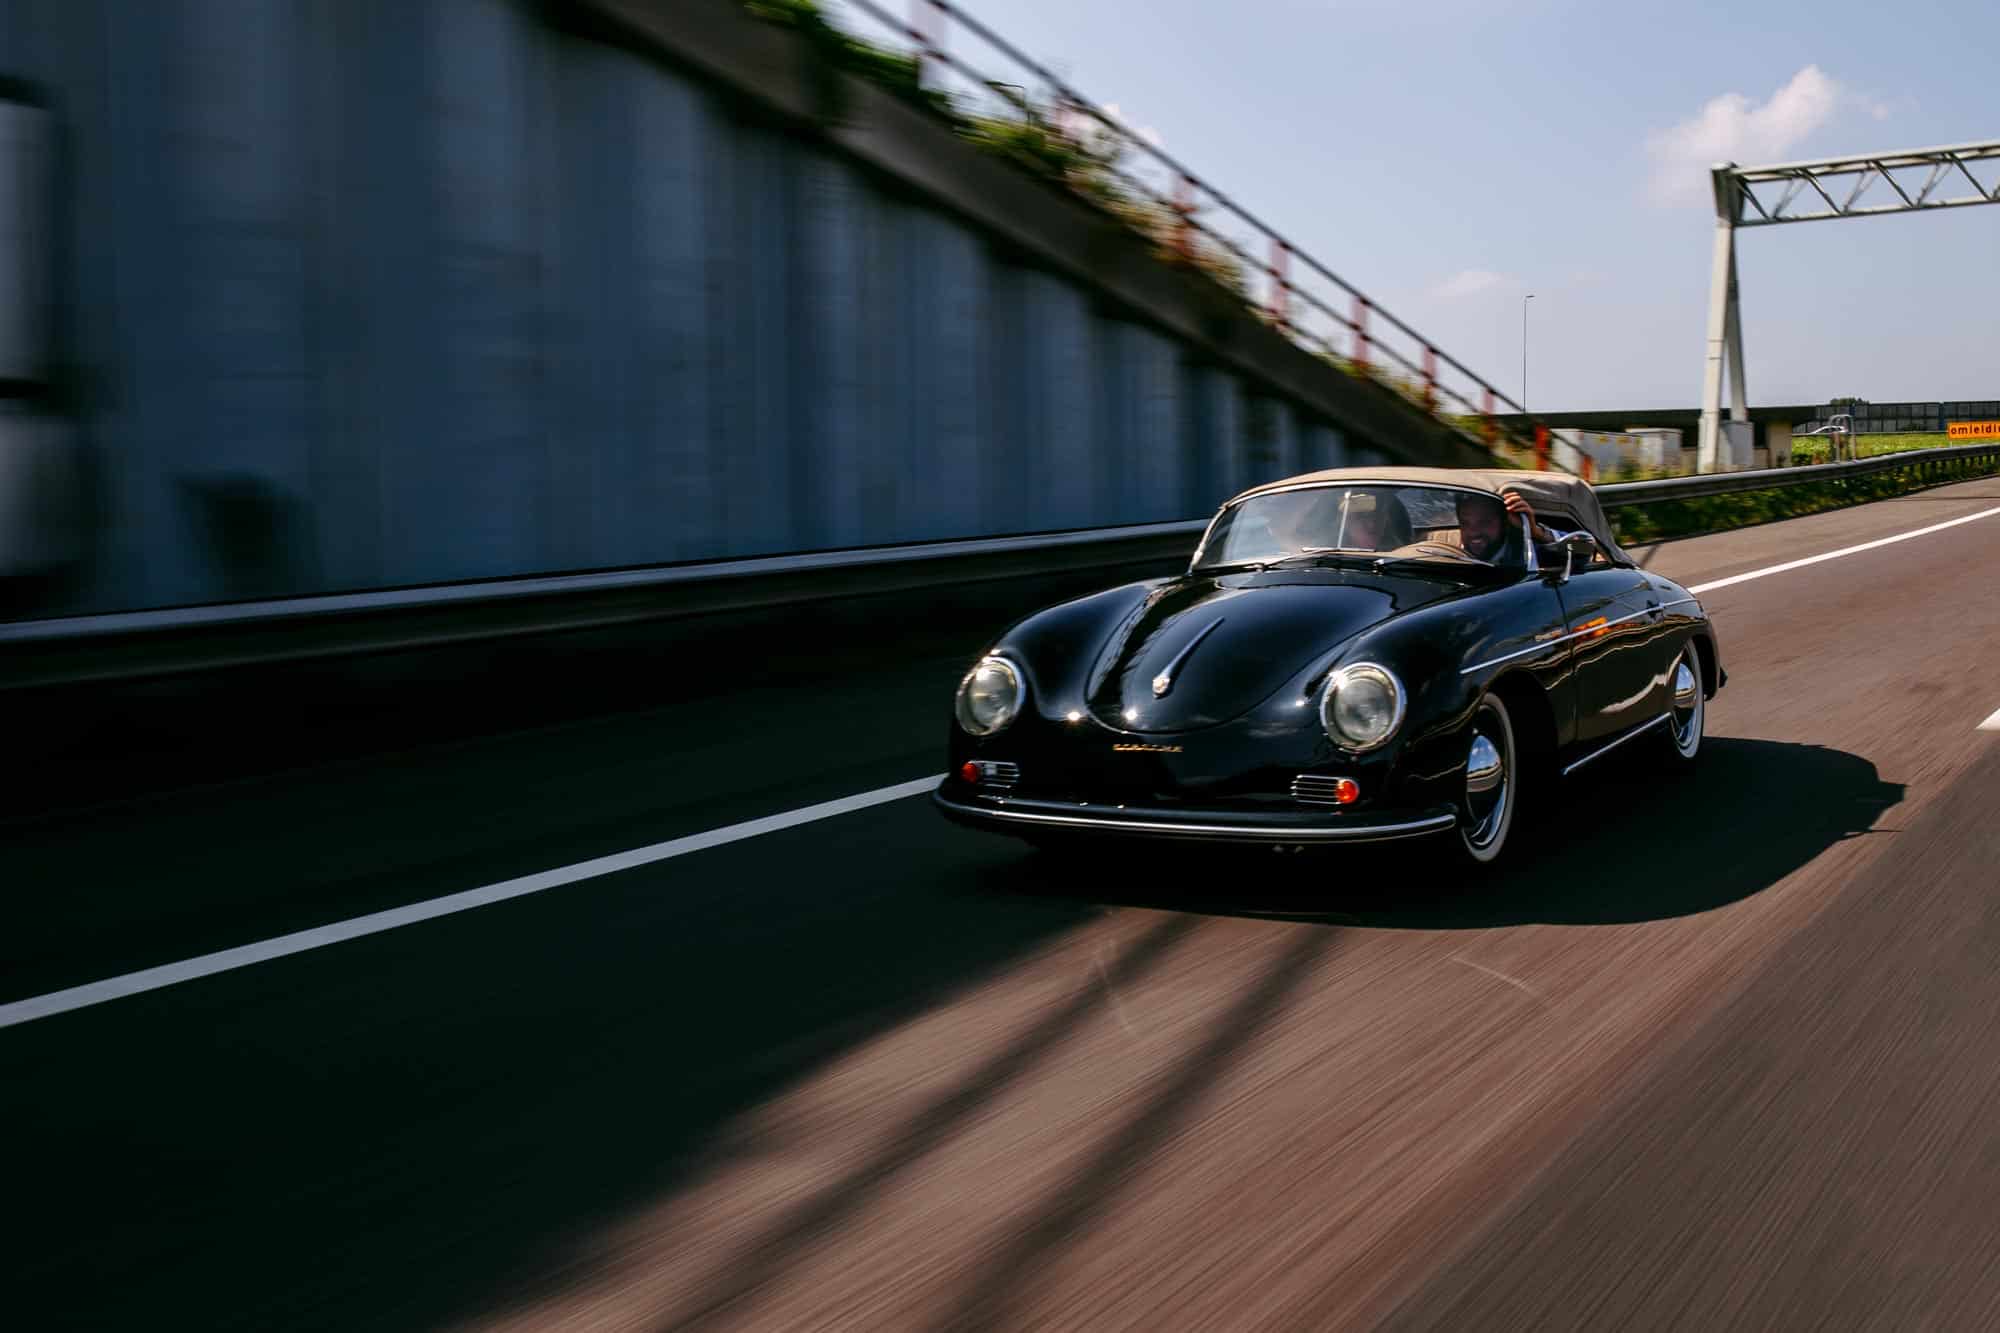 A black Porsche 356 speedster driving down the highway taking special wedding photos.